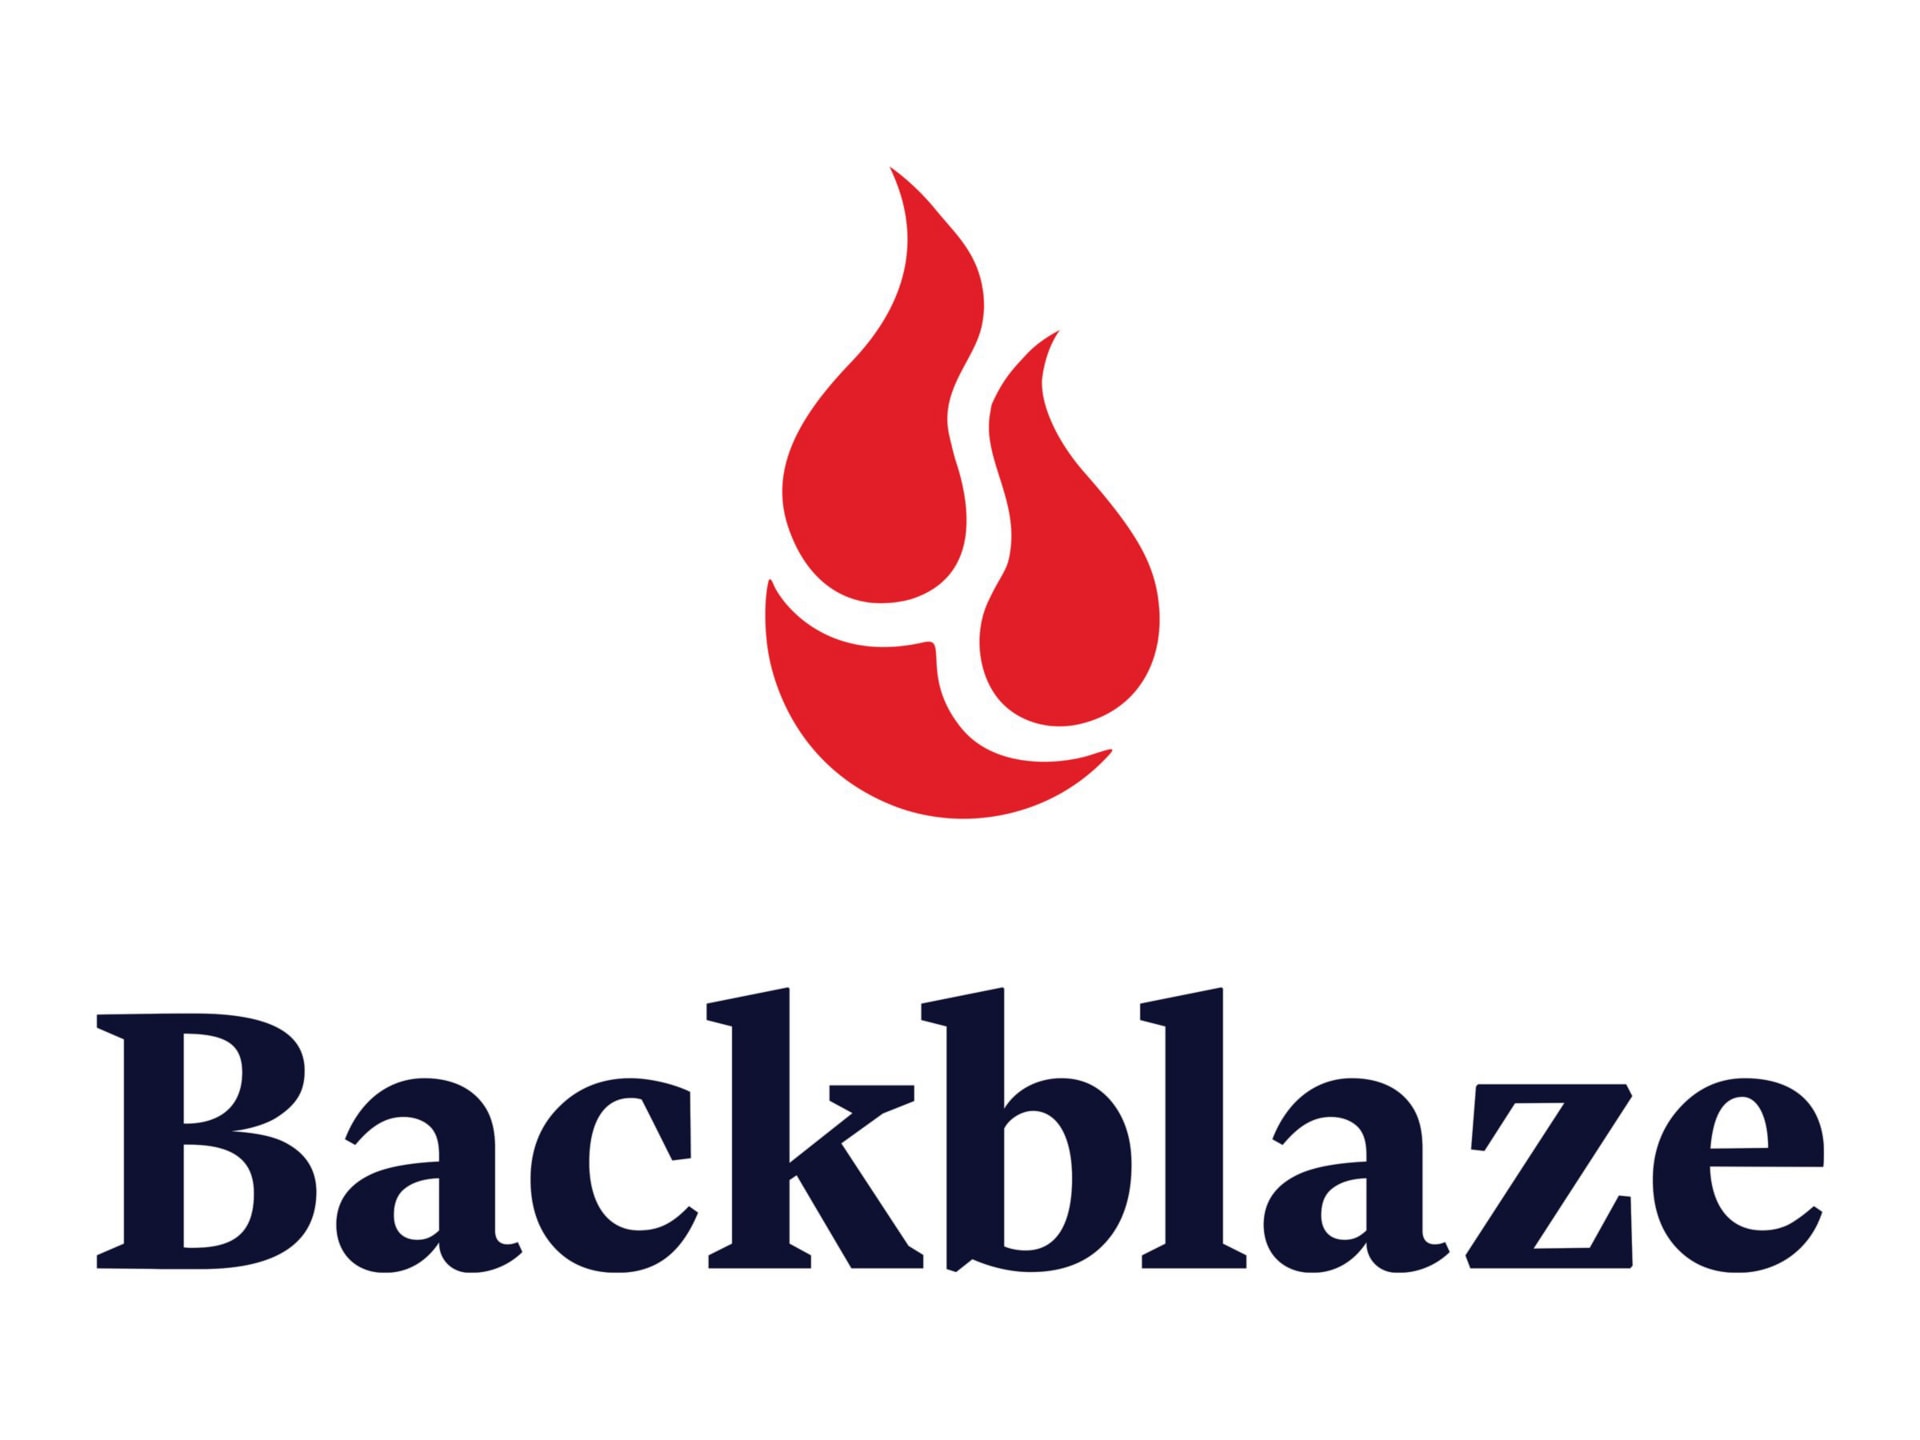 Backblaze B2 Reserve - subscription license (1 year) - 150 TB capacity